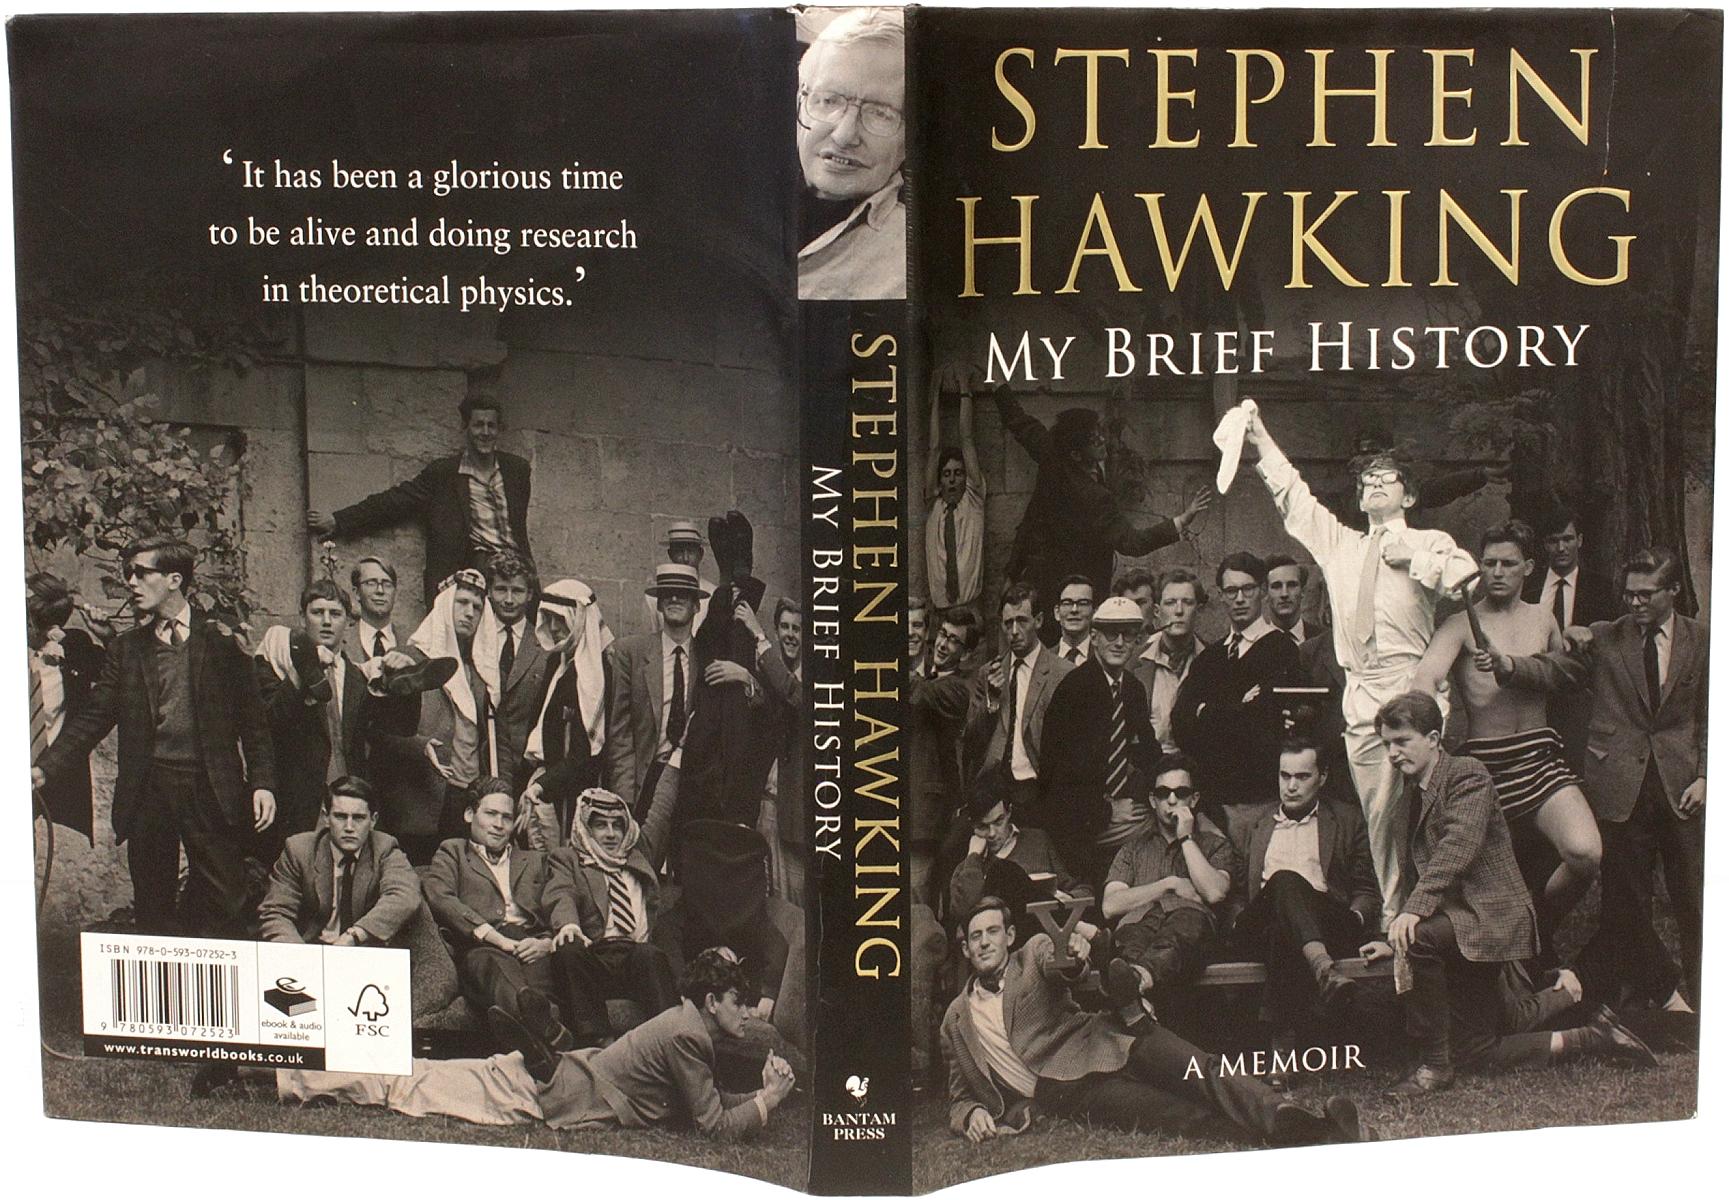 stephen hawking signed book